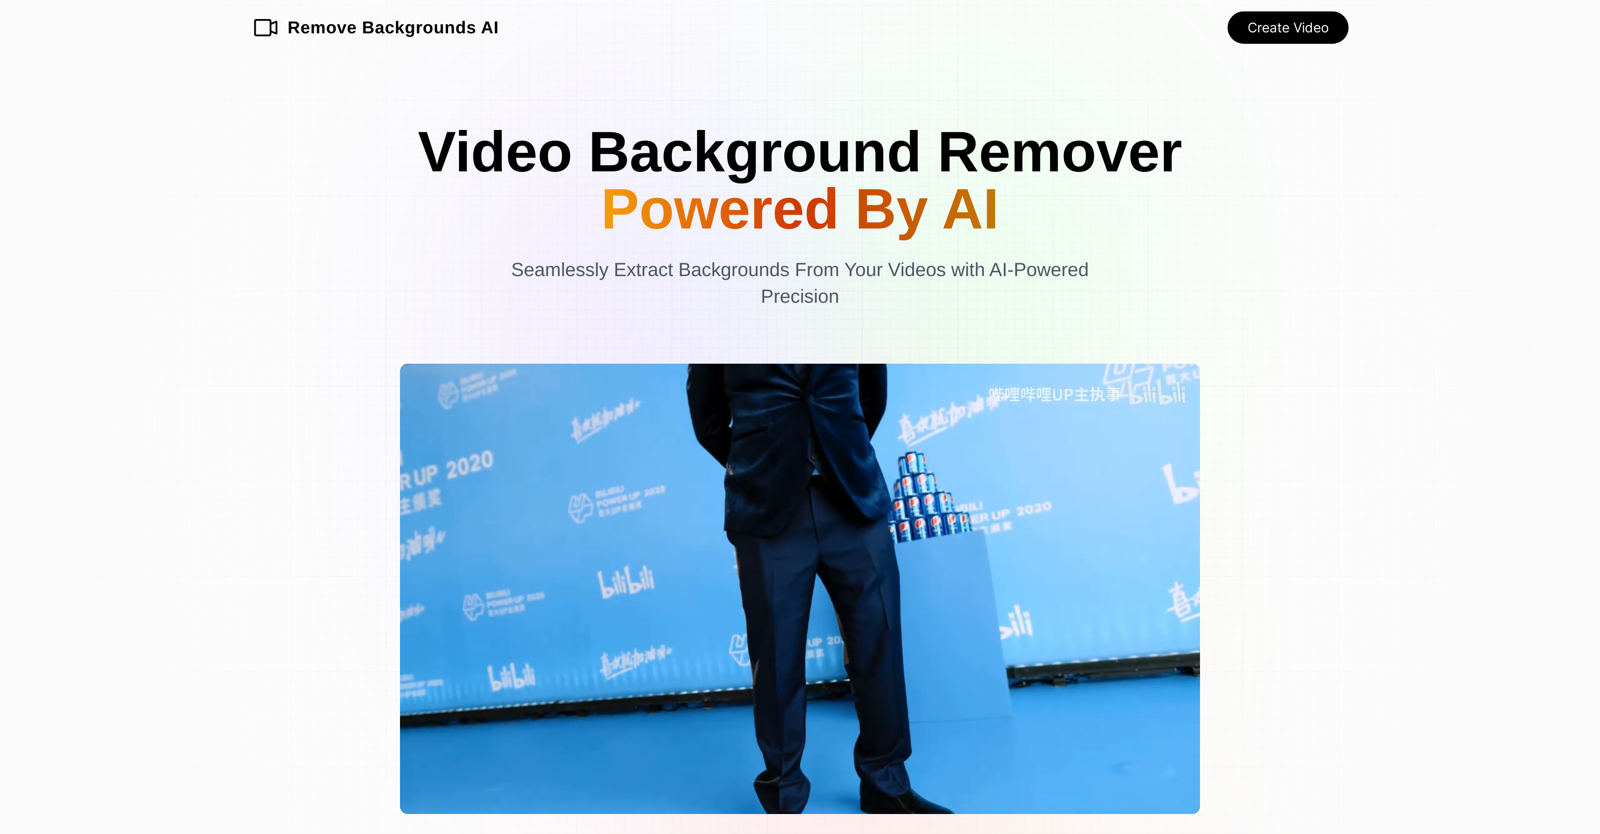 Remove Backgrounds AI website